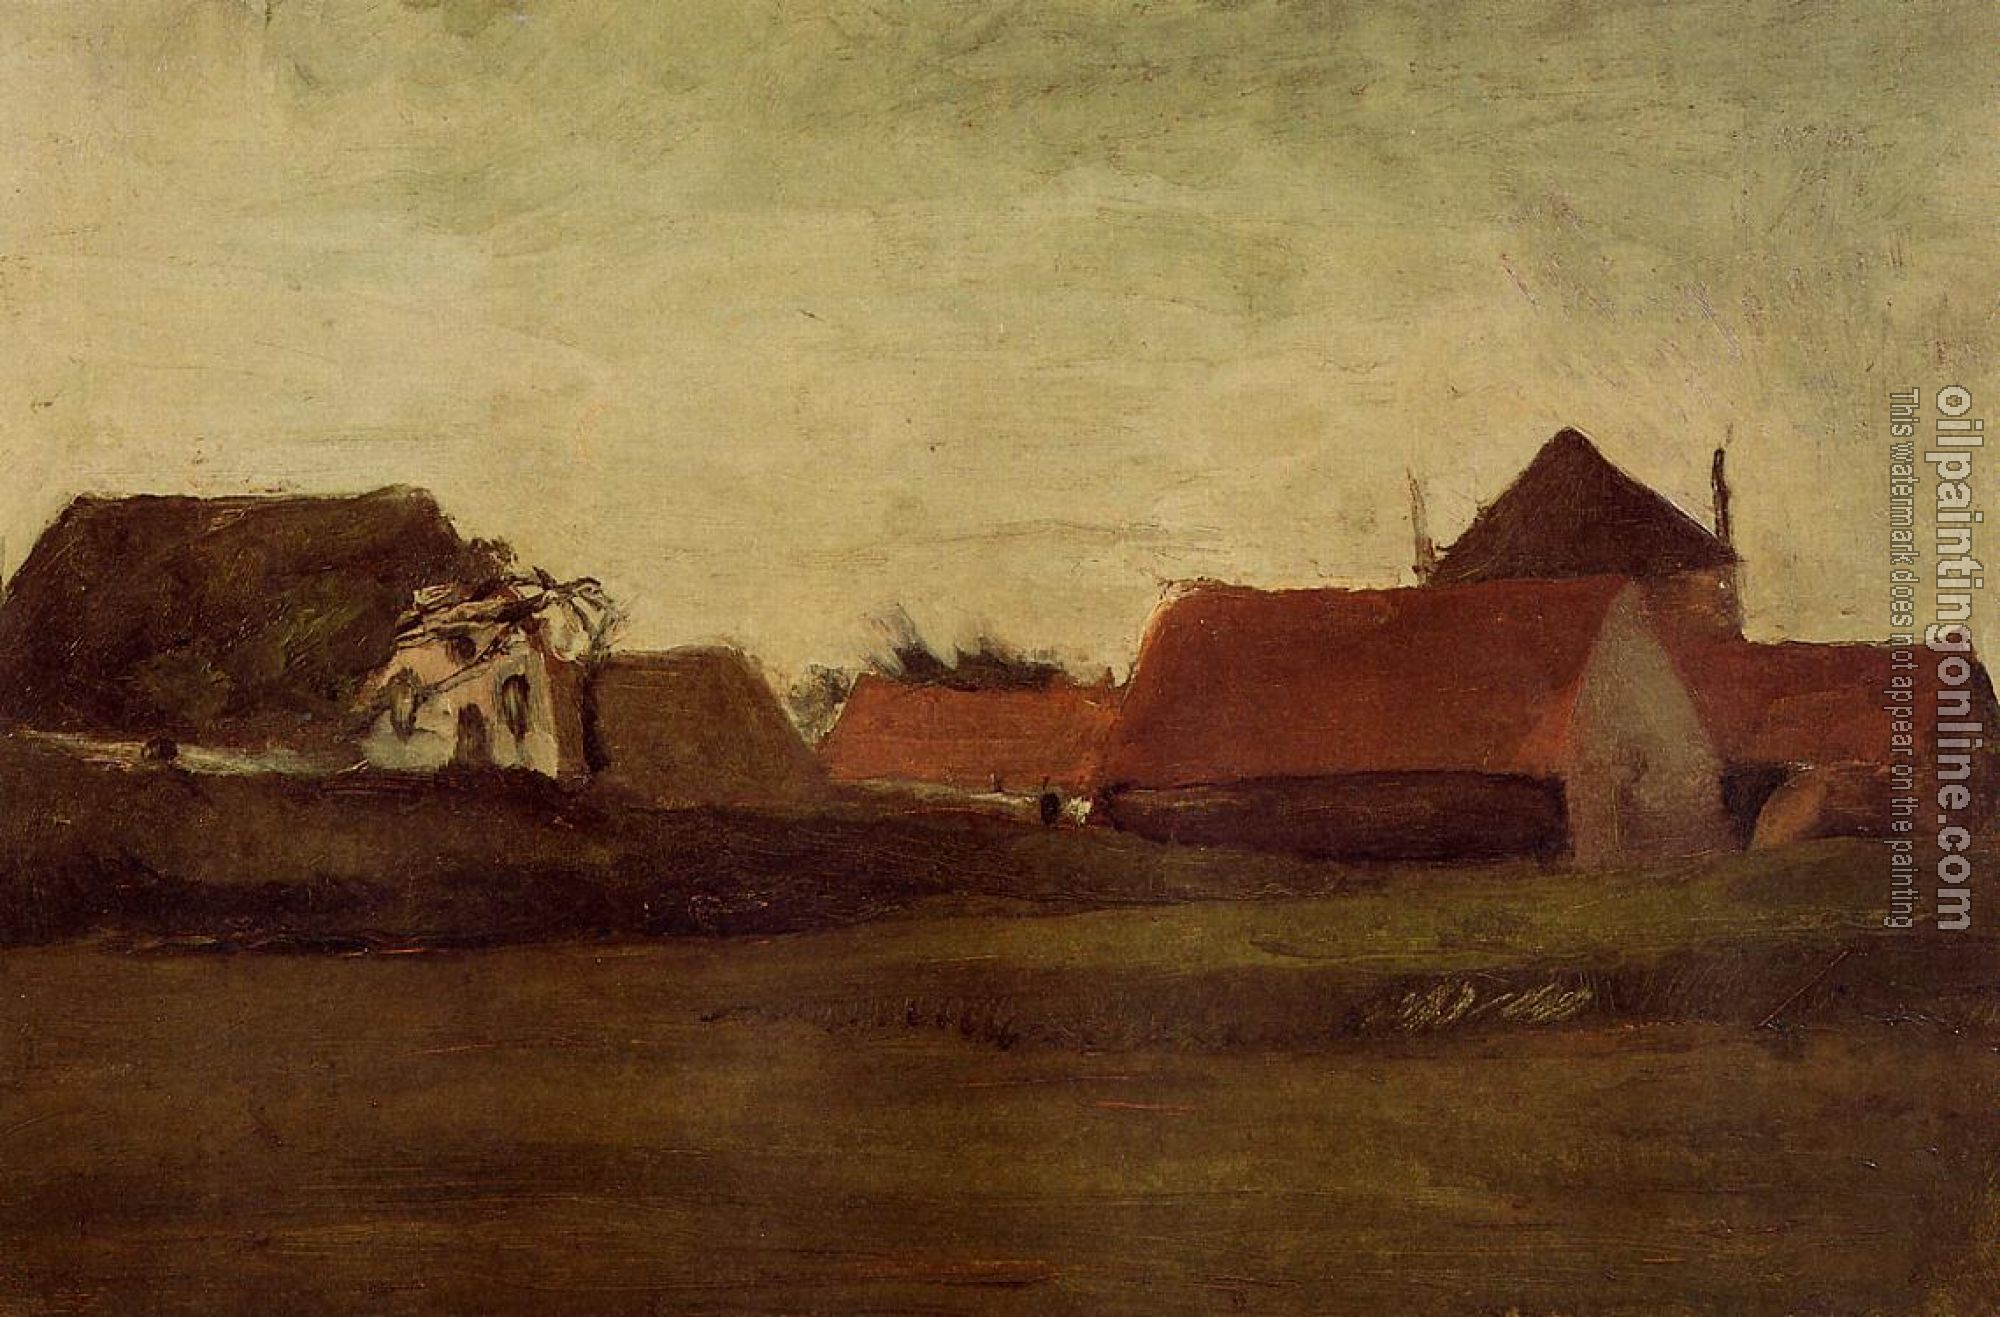 Gogh, Vincent van - Farmhouses in Loosduinen near the Hague at Twilight